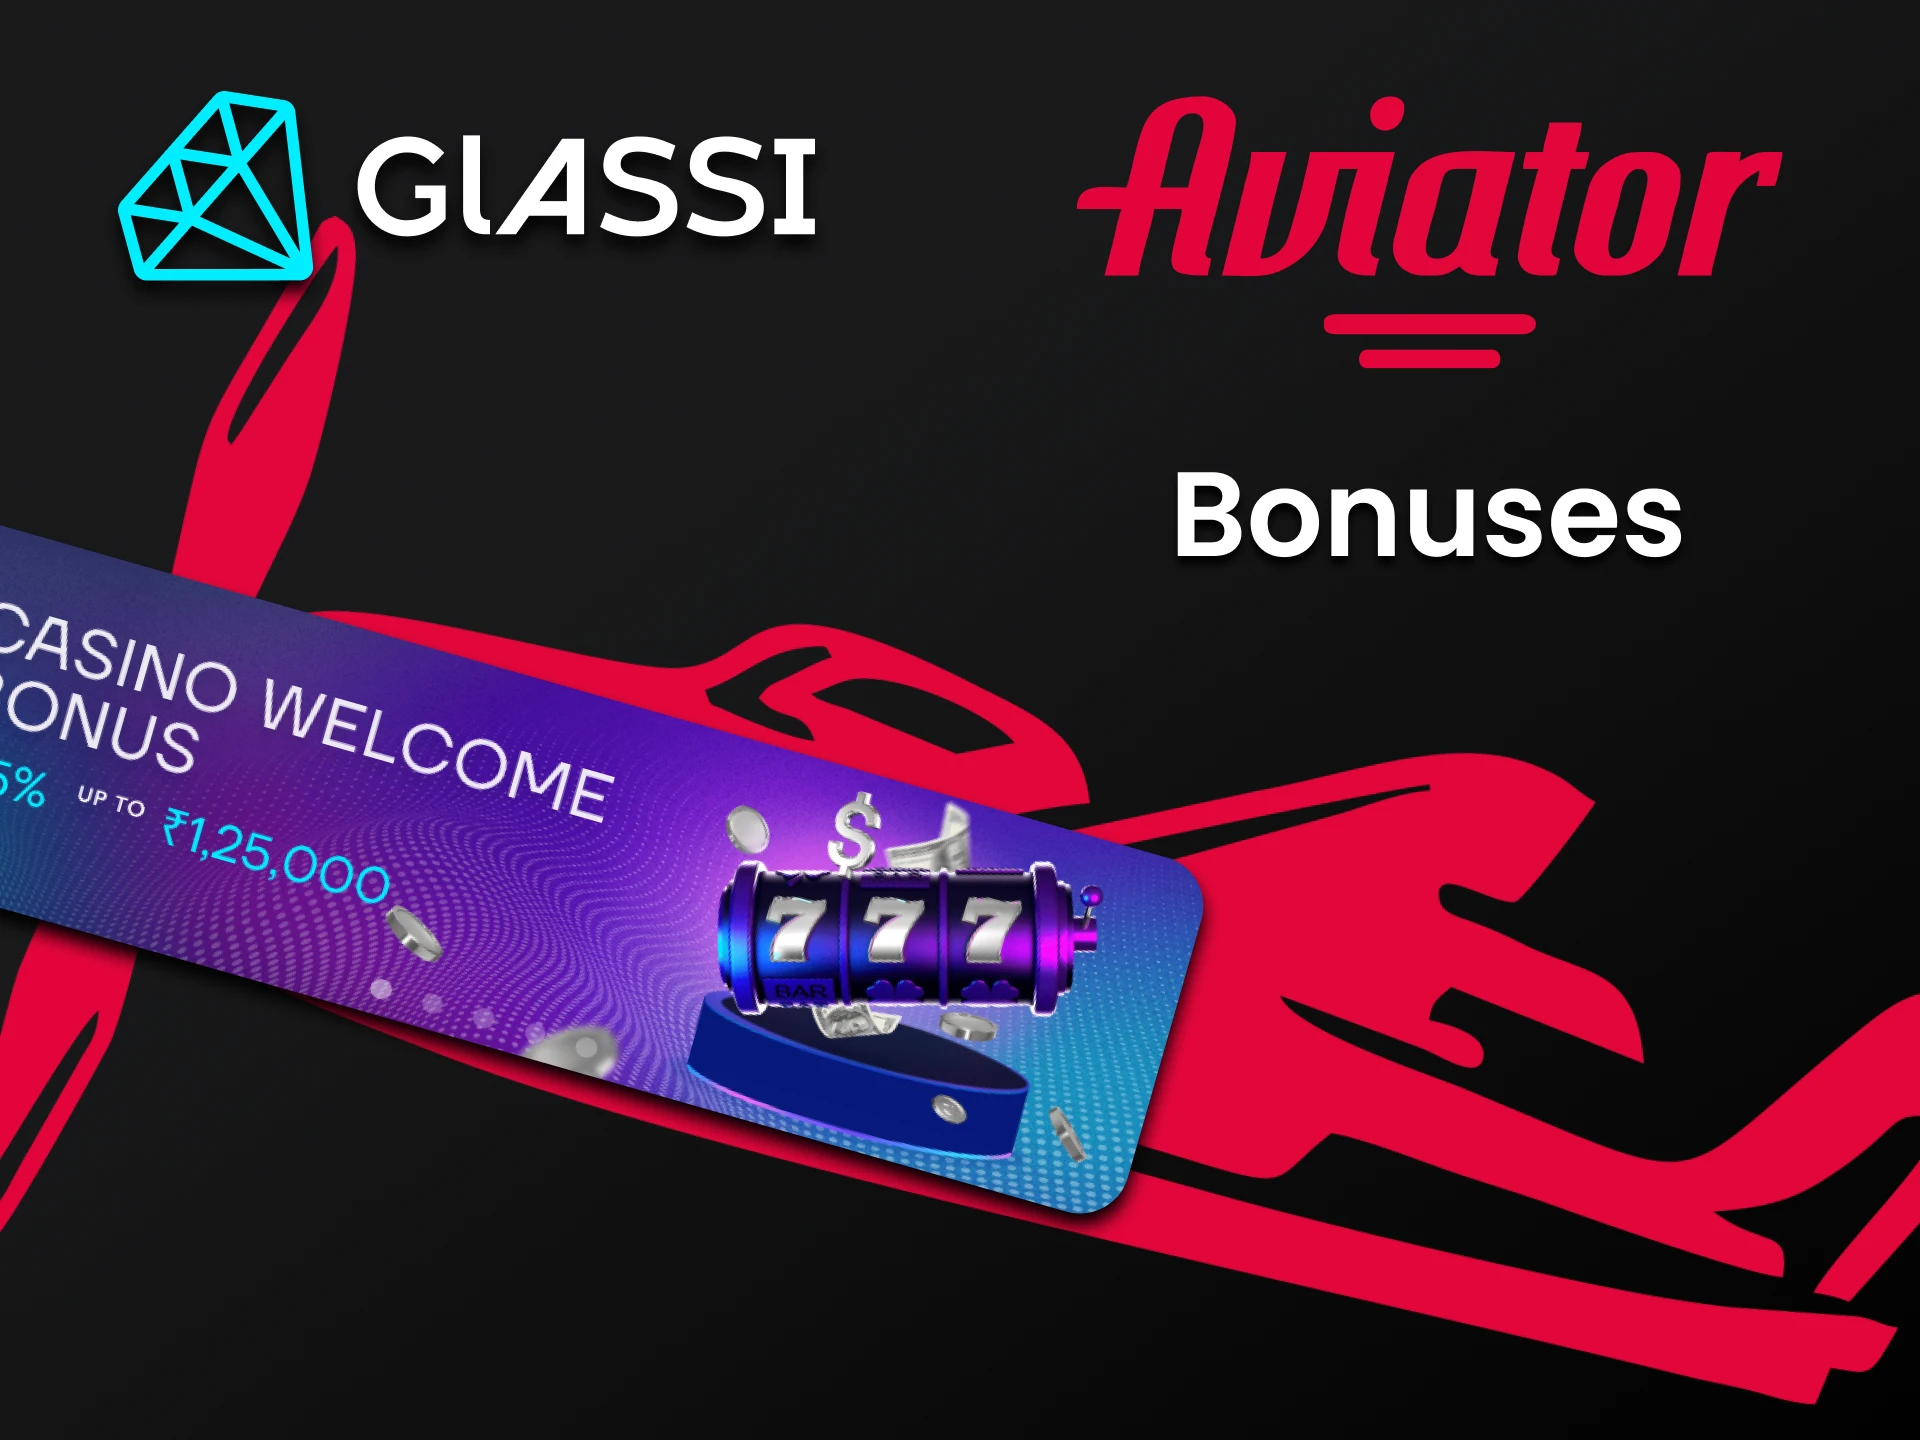 Glassi Casino gives bonuses for the Aviator game.